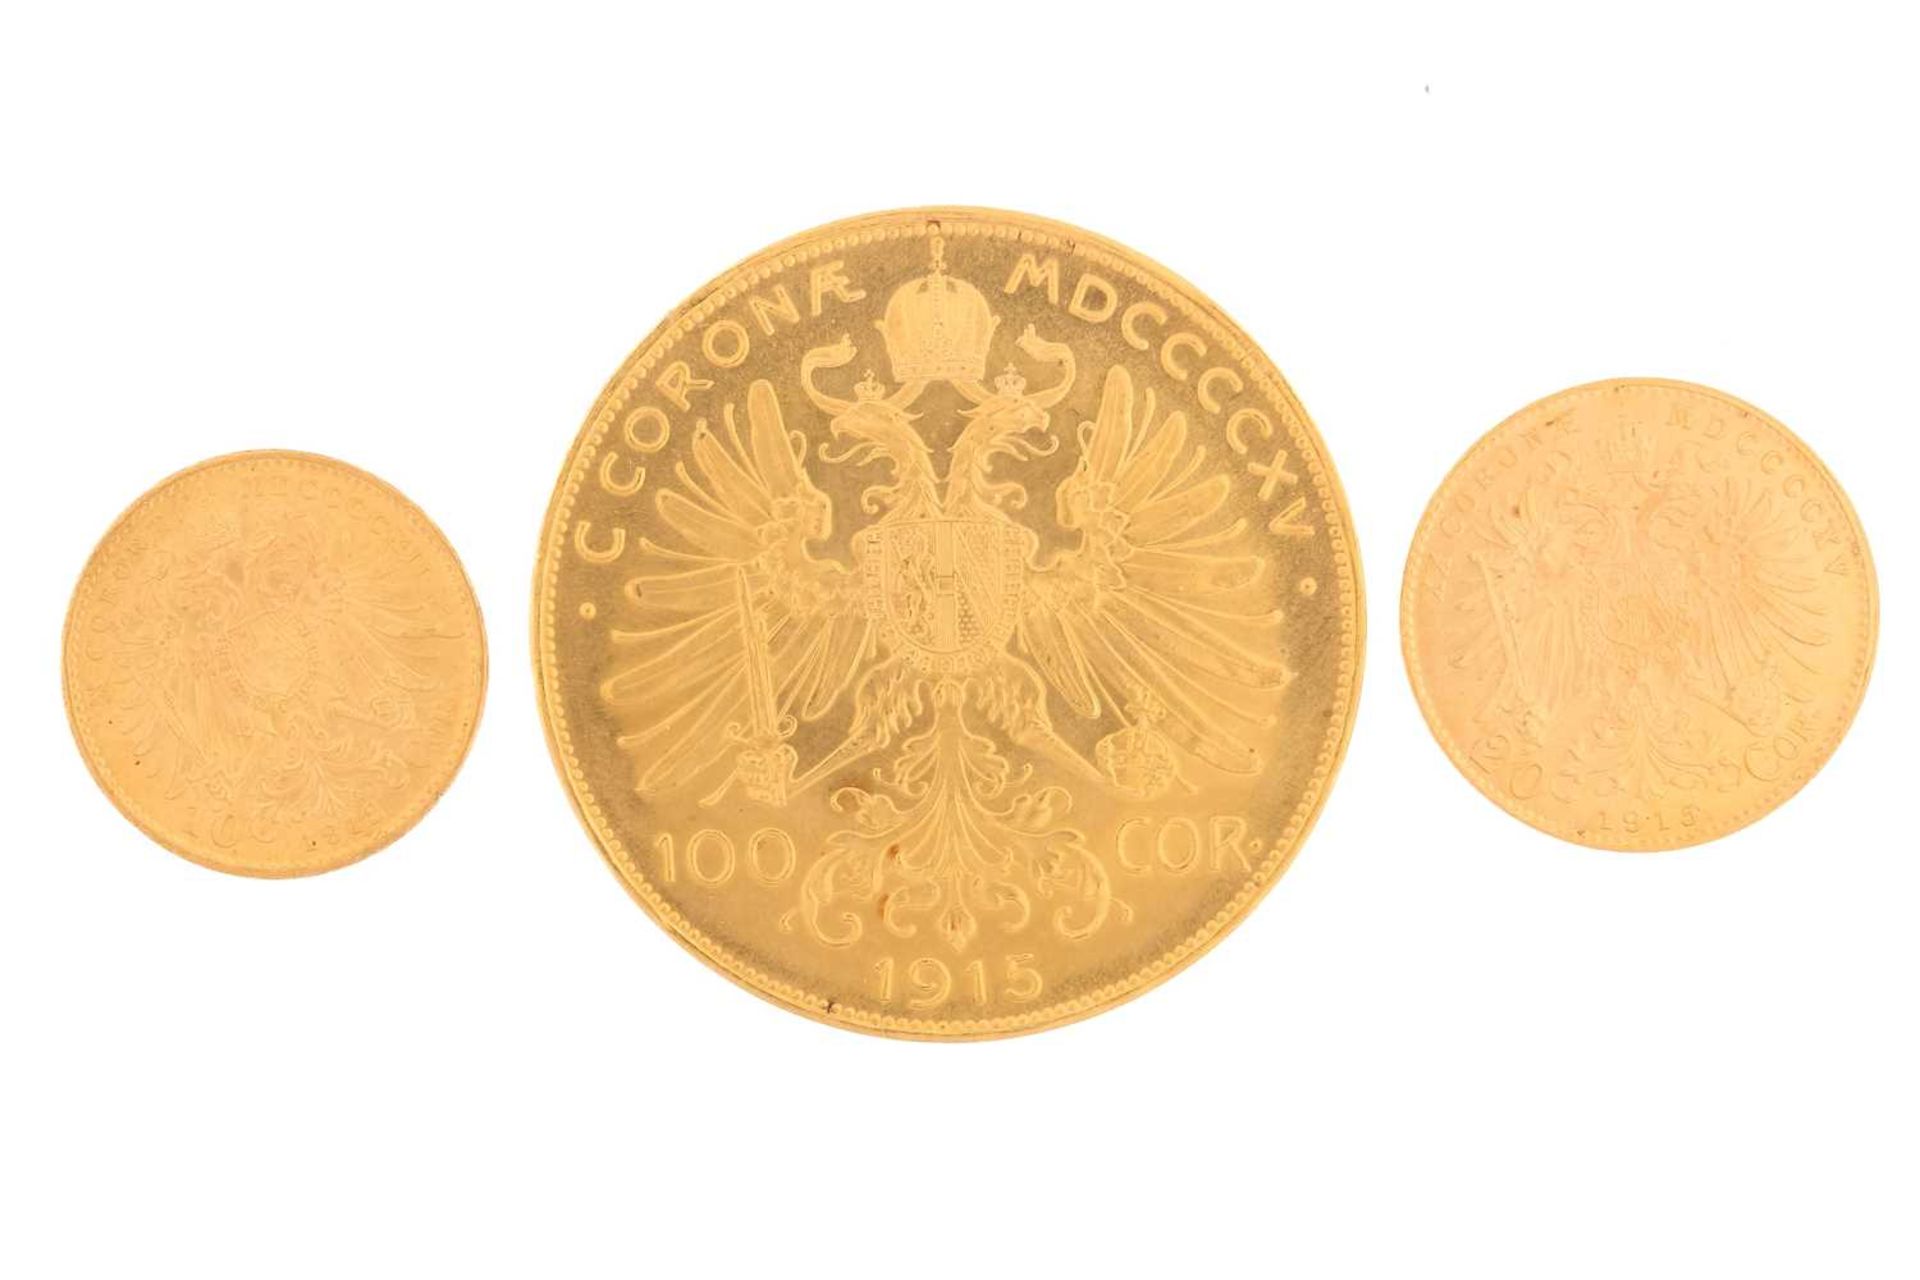 Austria - Franz Joseph I, gold 100, 20 & 10 Corona, 1915 & 1912 - Image 2 of 2